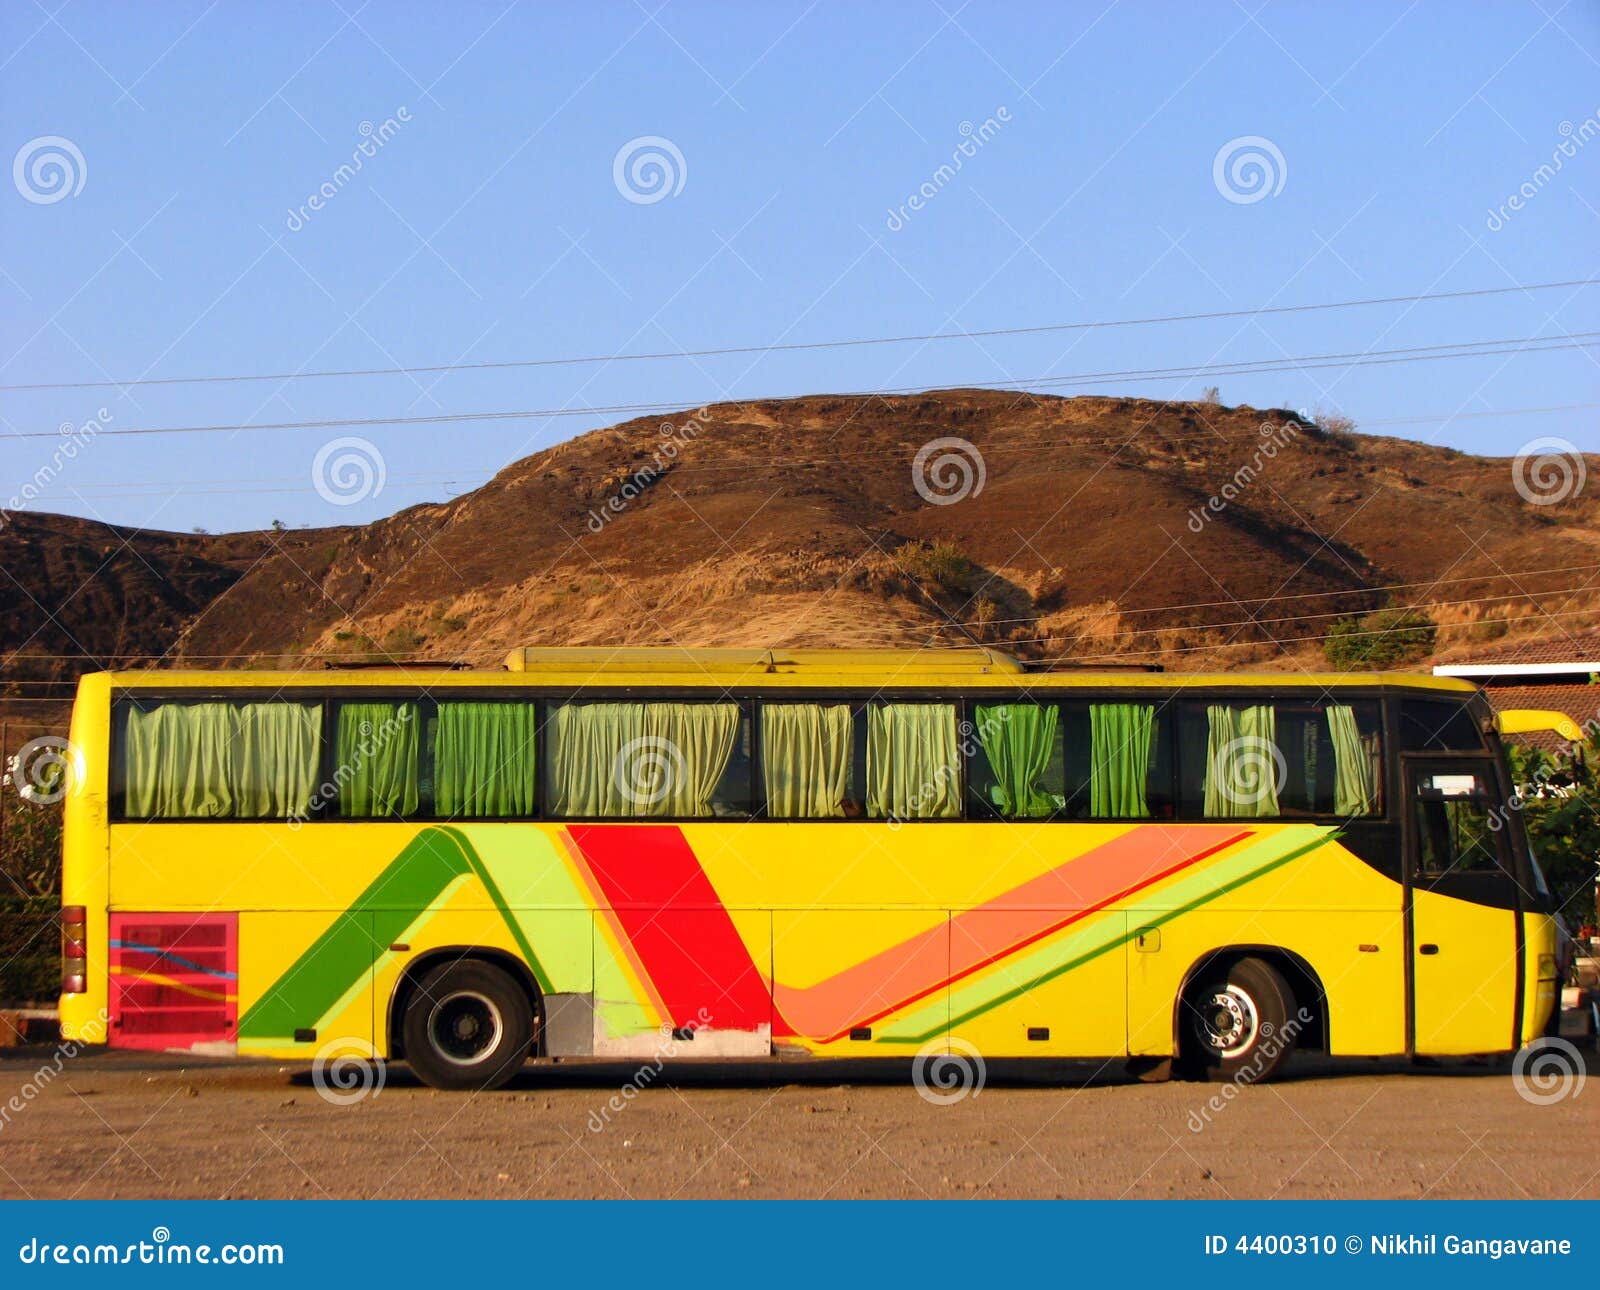 tourist bus stock images